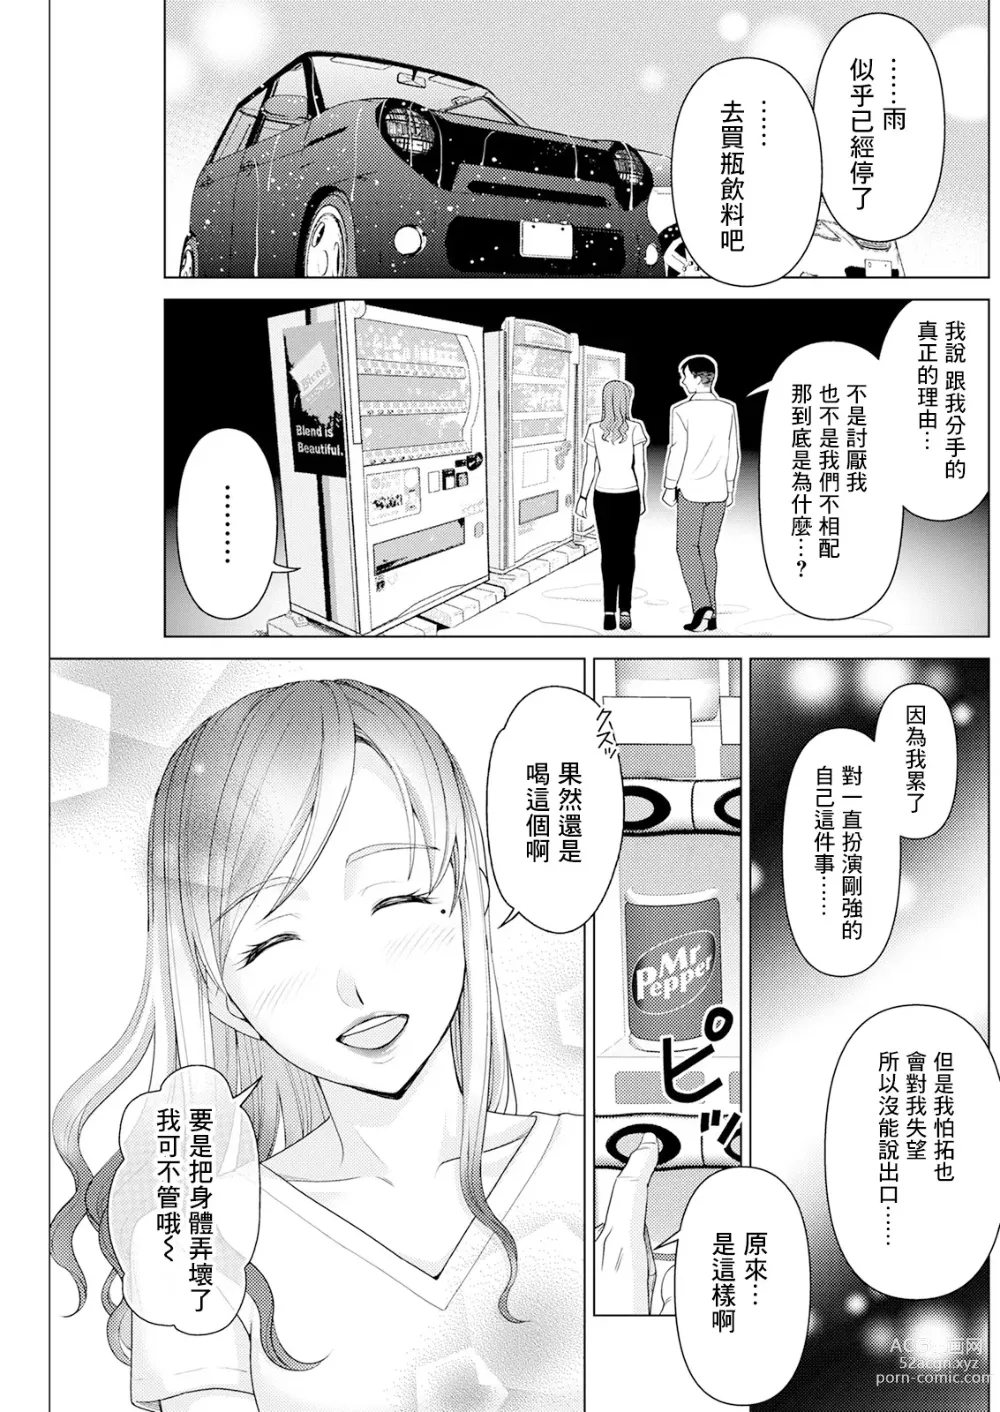 Page 17 of manga Kawari, Hateru.